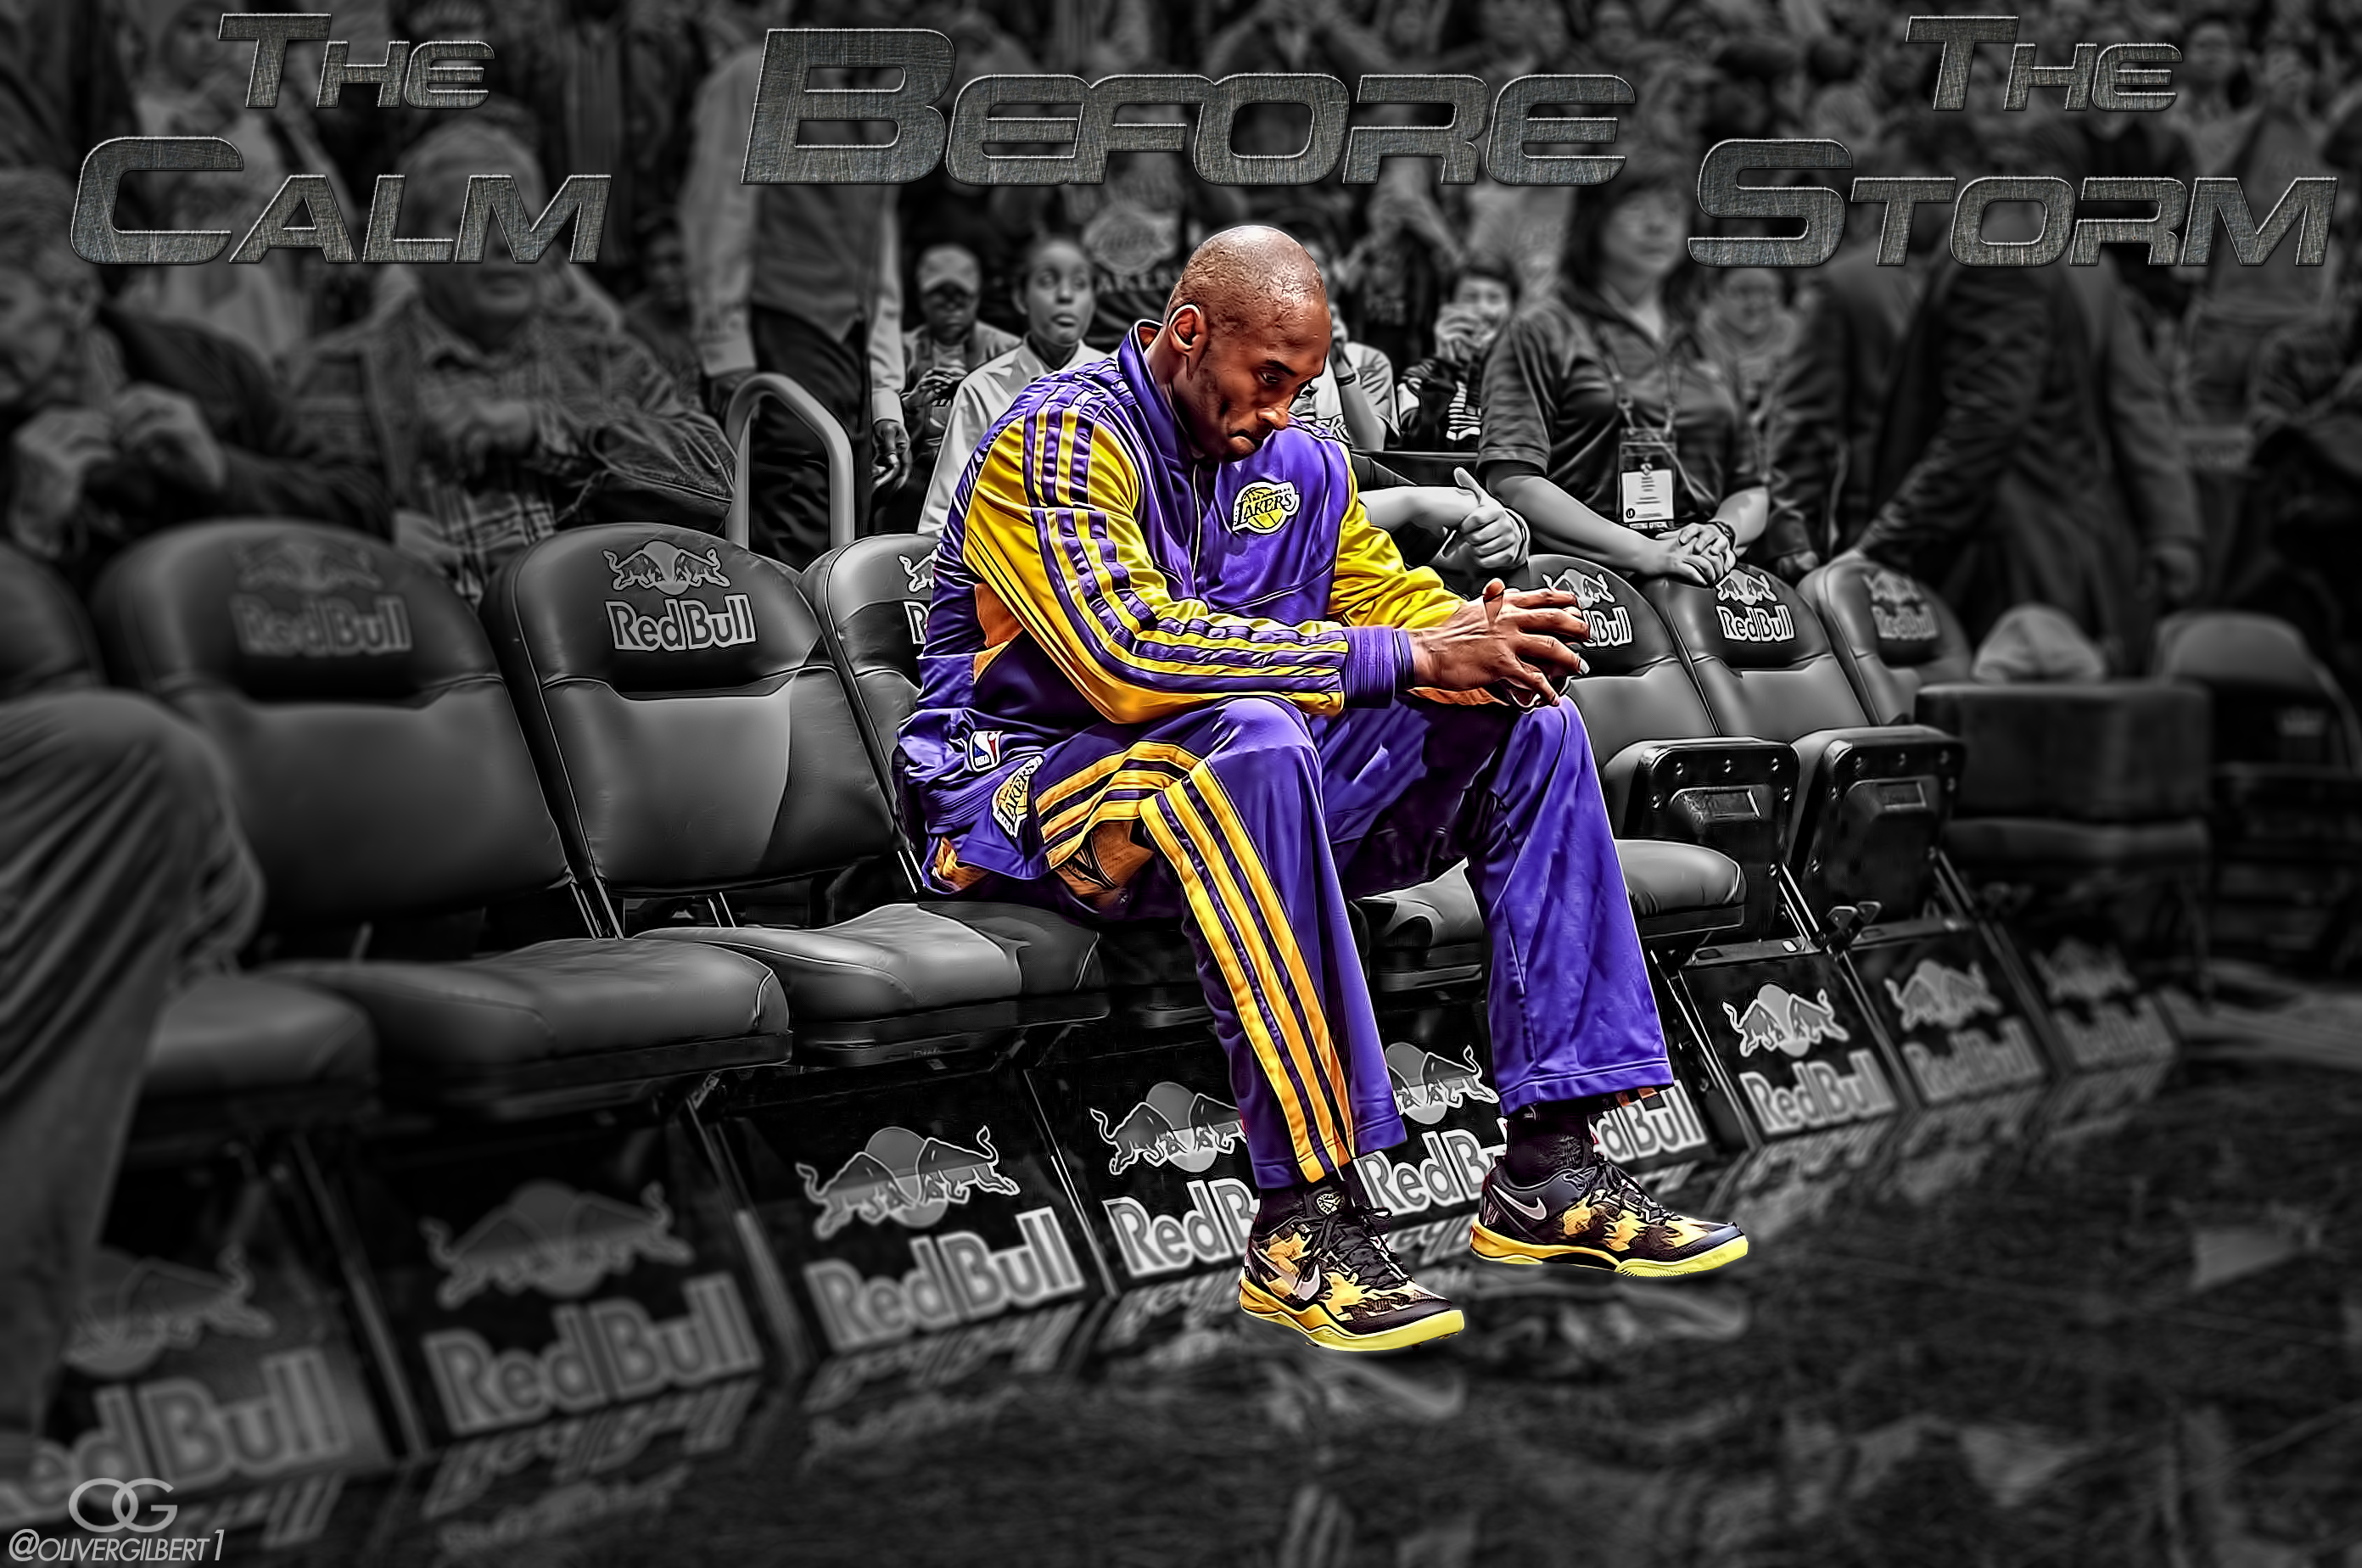 Kobe Bryant Lakers Wallpaper HD. Wallpaper, Background, Image